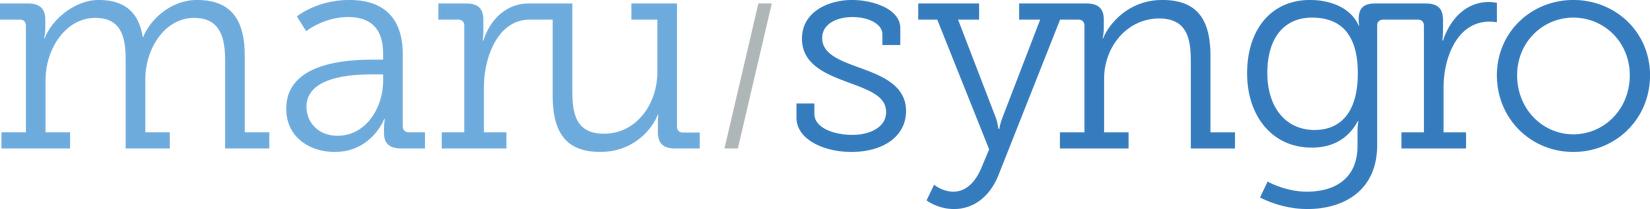 MaruSyngro Logo